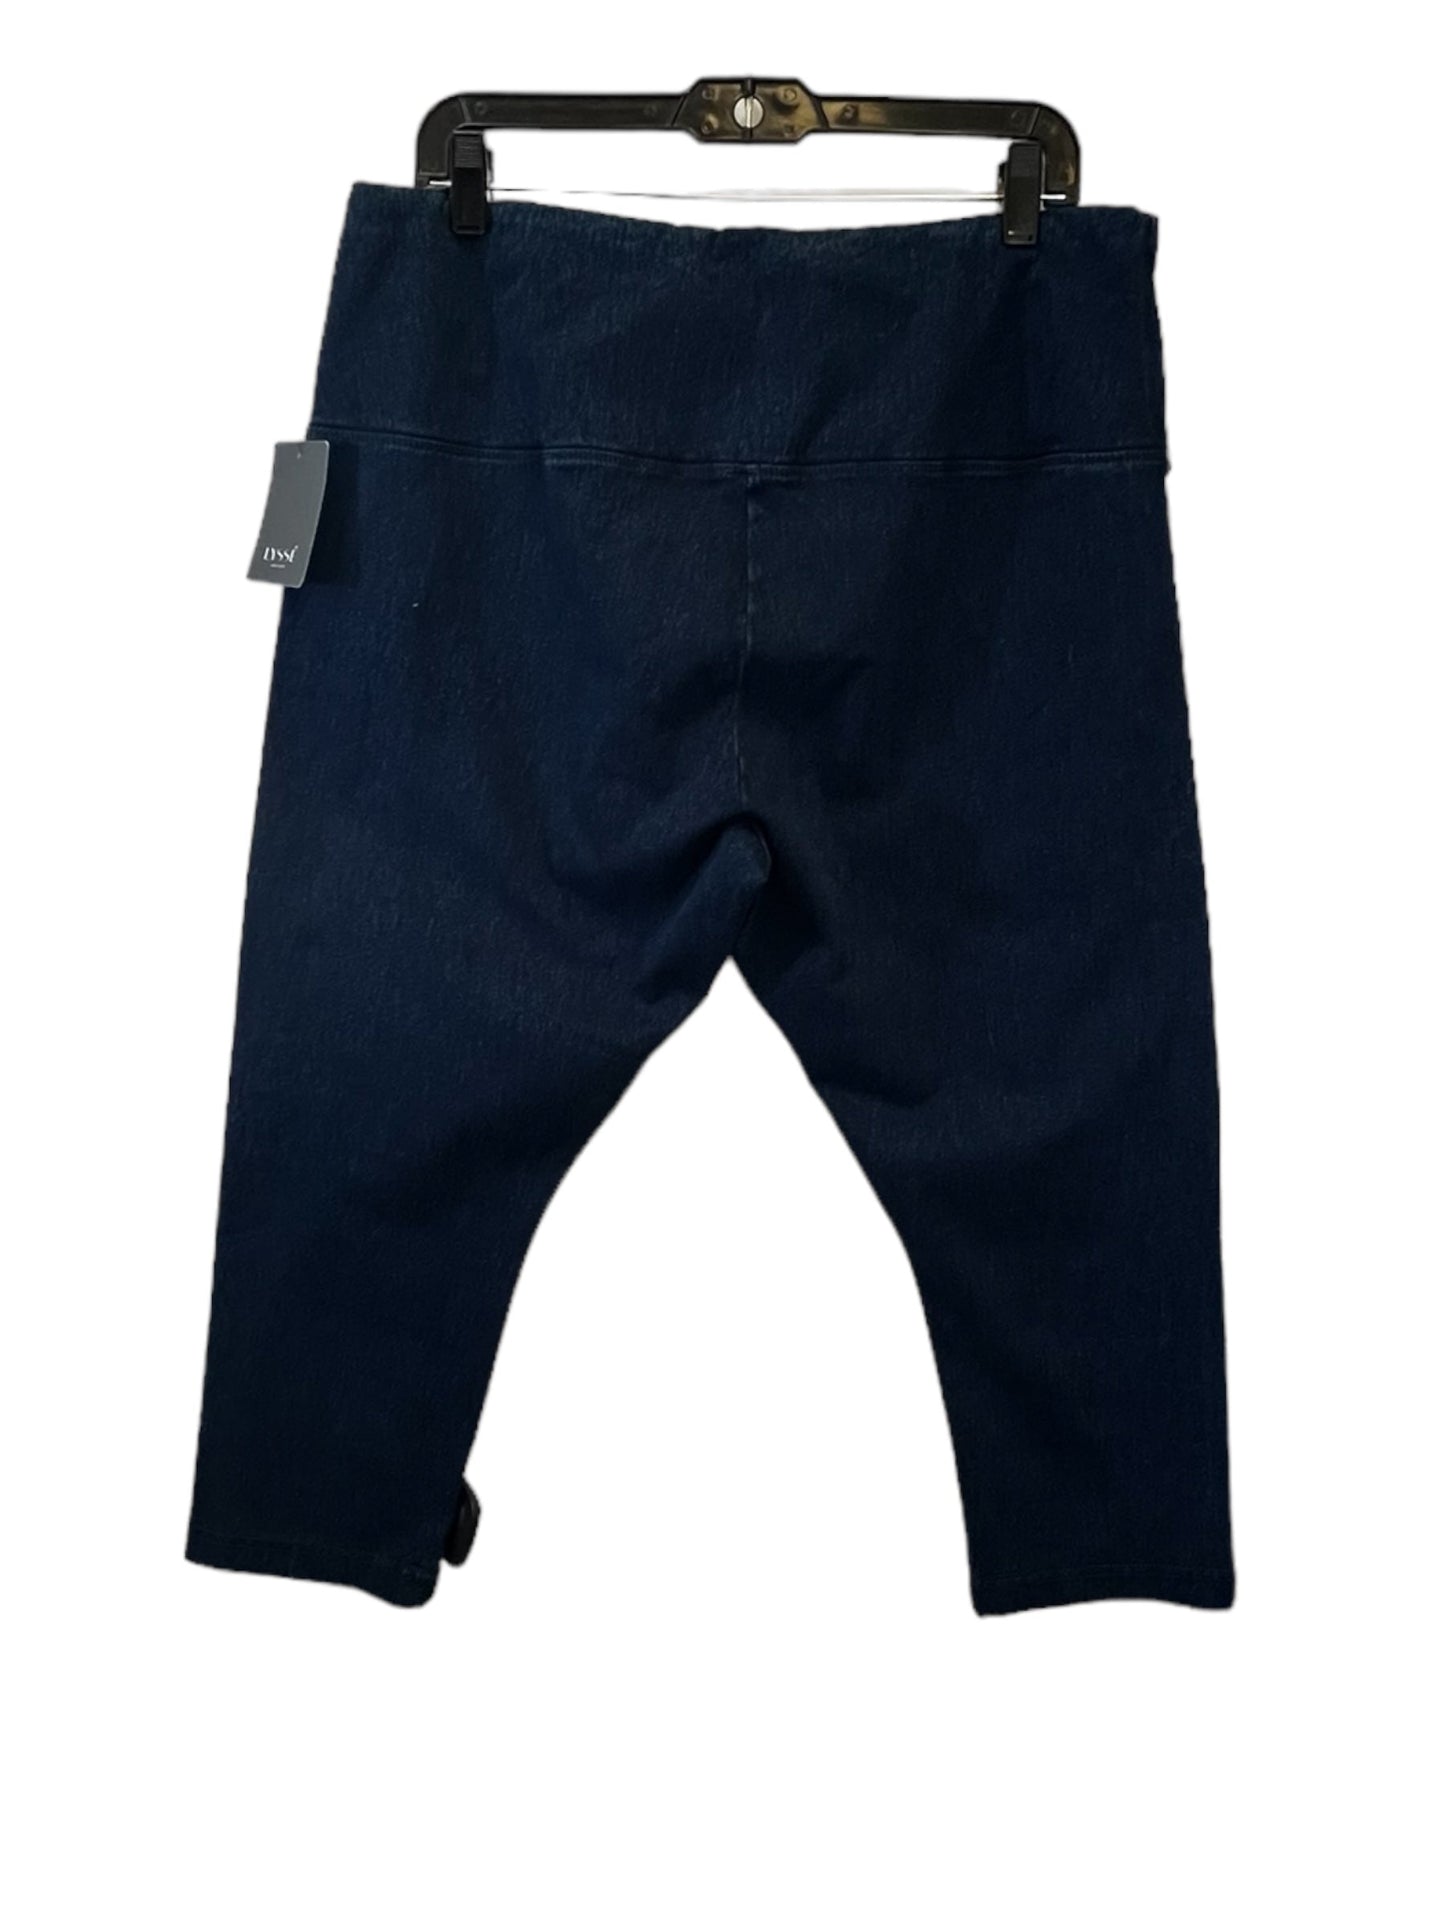 Blue Denim Pants Leggings Lysse, Size 1x